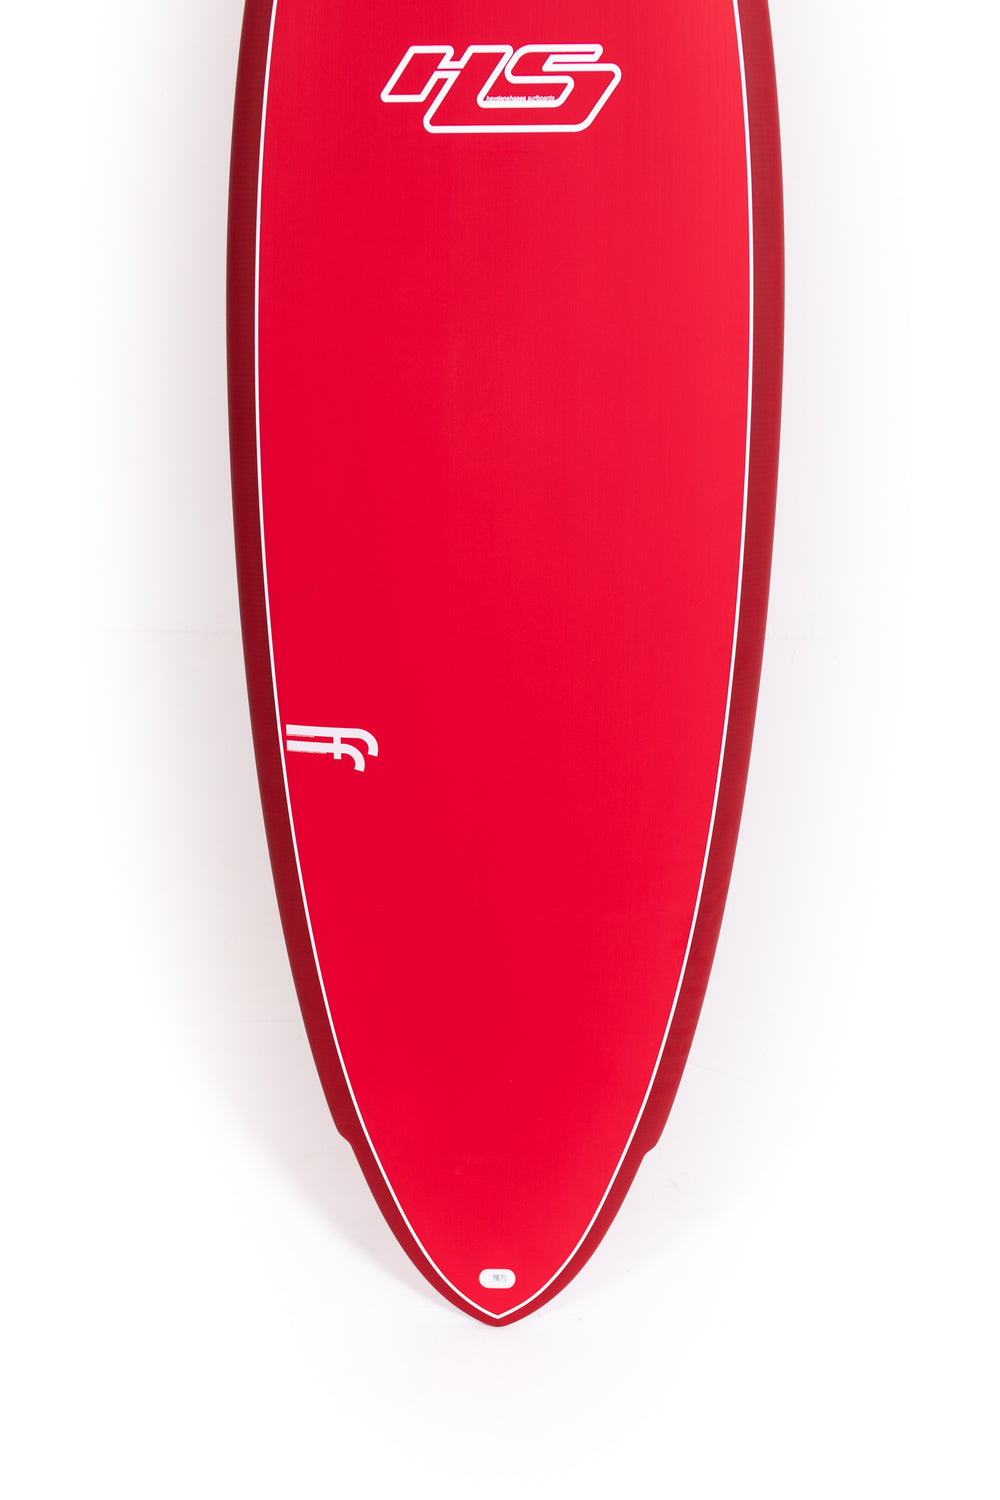 HaydenShapes Surfboard - HYPTO KRYPTO TWIN PIN - 5'9